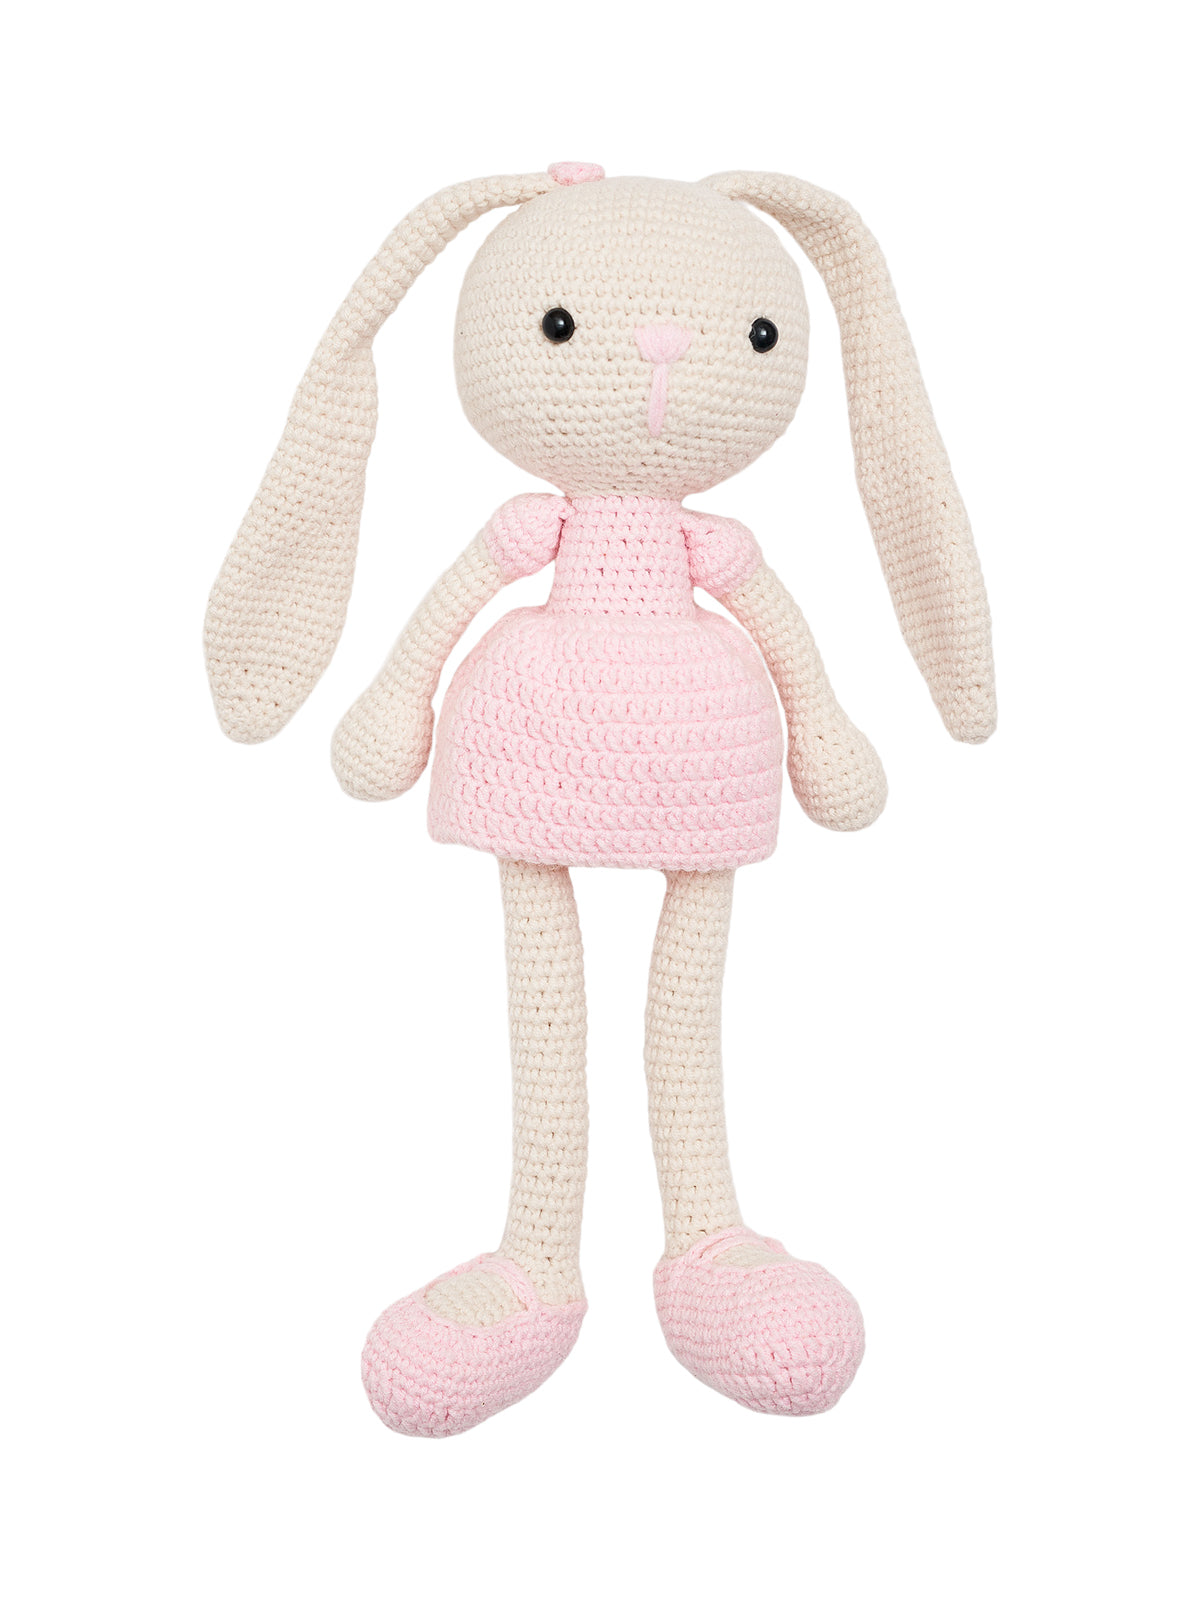 Crochet kit Amigurumi Ballerina Bunny DIY Stuffed Animal Toy Kit